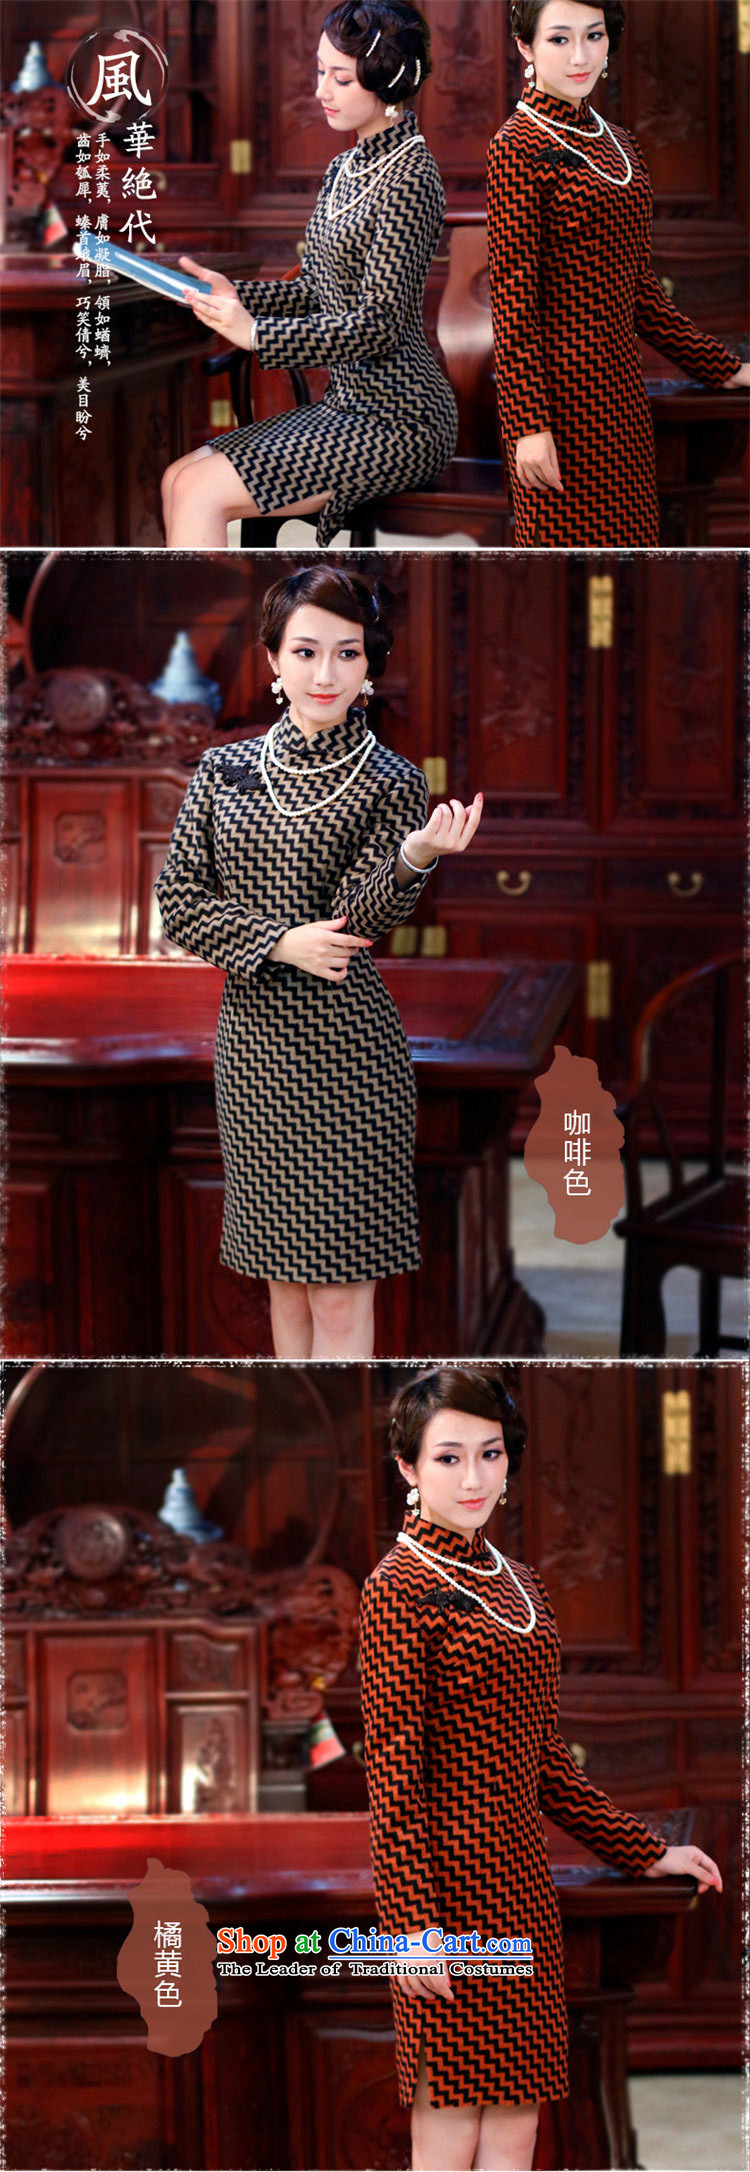 After 2014 the new wind autumn and winter streaks long-sleeved qipao warm wool retro cheongsam dress? 